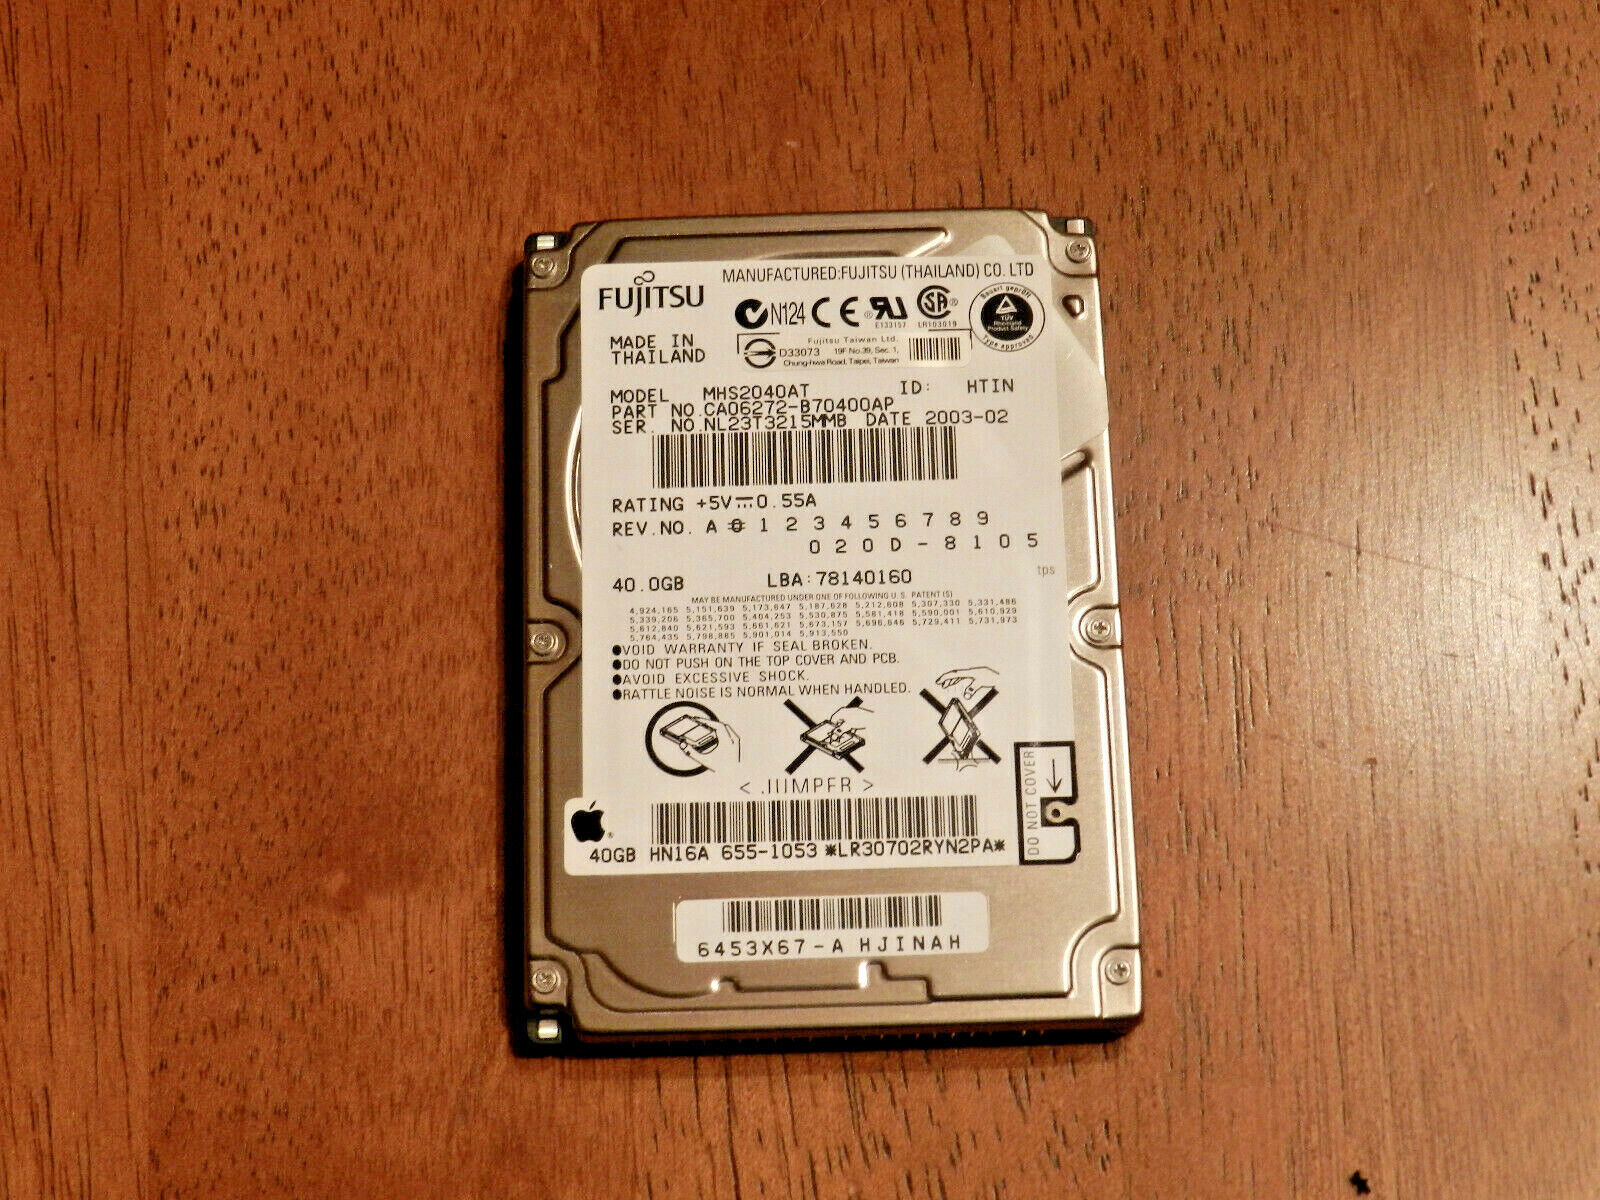 Apple OEM Fujitsu 40GB 2.5" ATA Internal Hard Drive from Mac G4 Ti PowerBook - $24.95